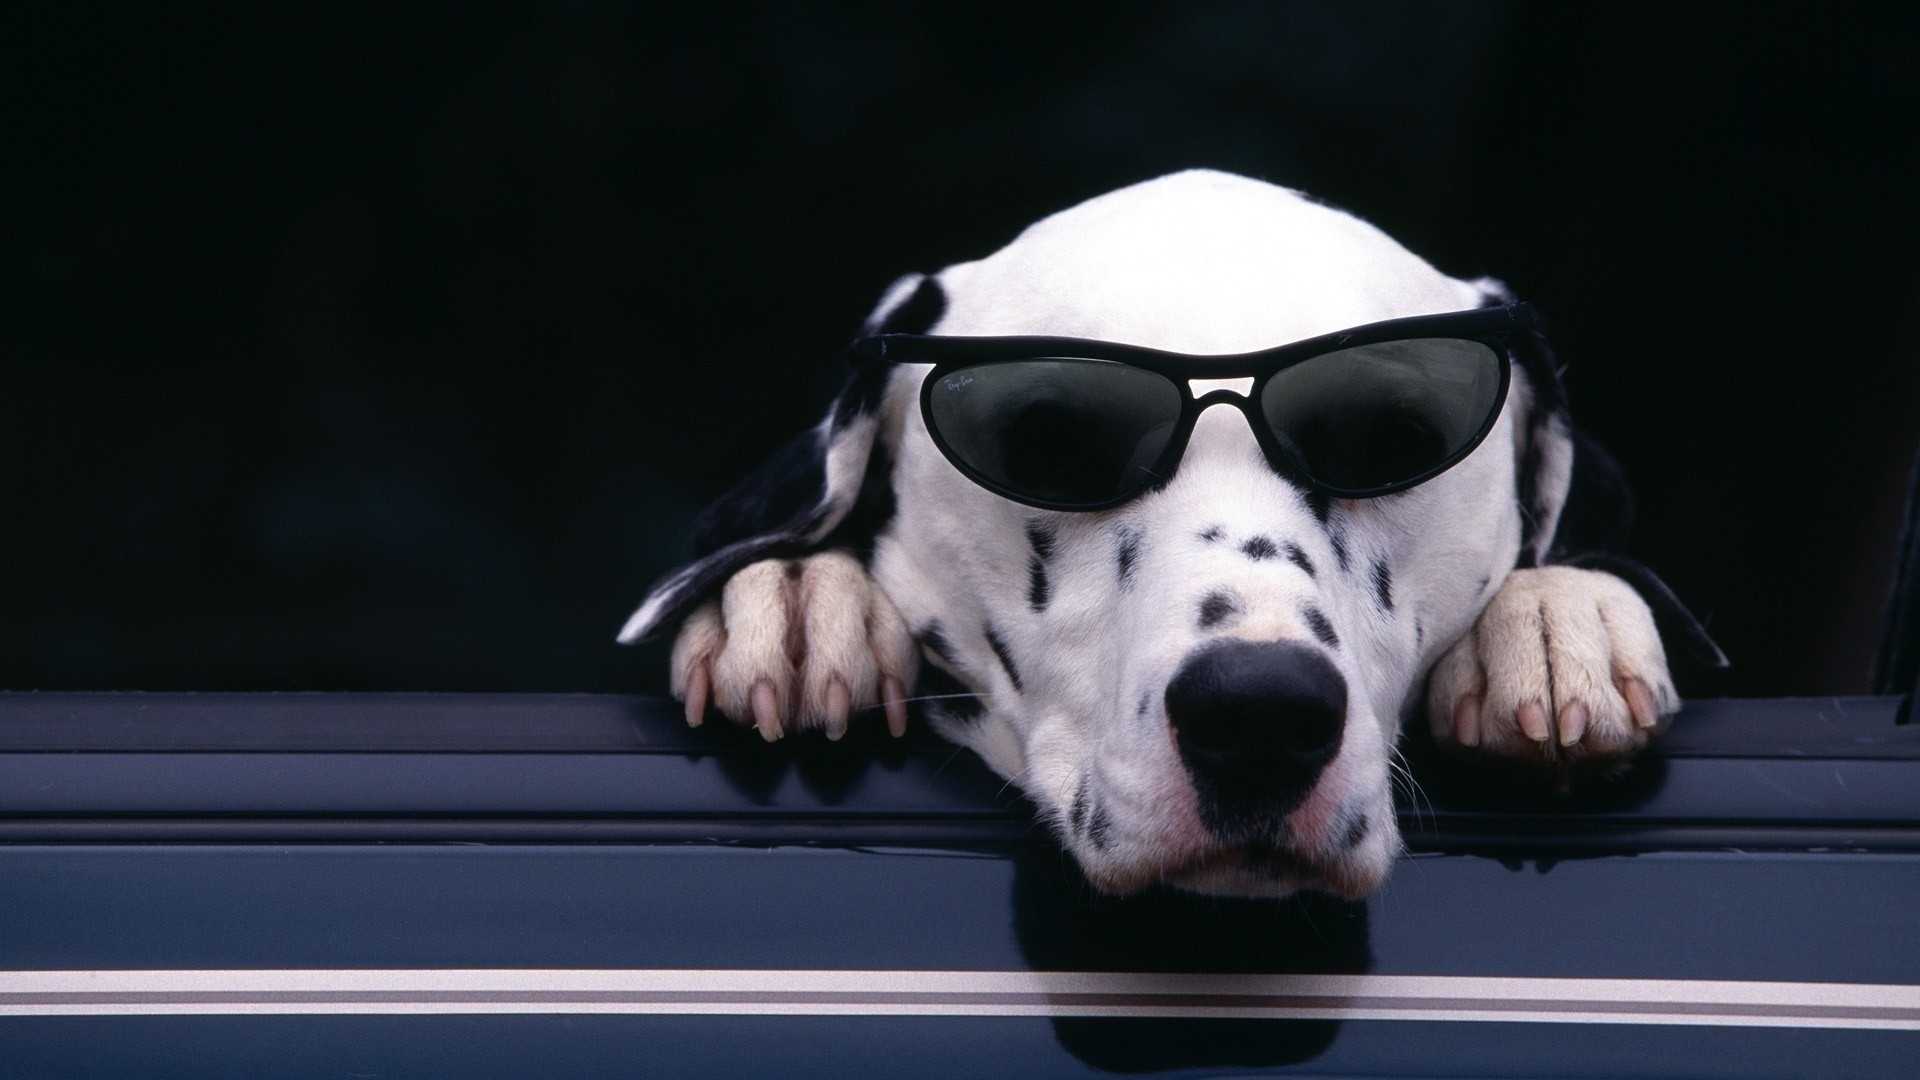 General 1920x1080 animals dog sunglasses mammals